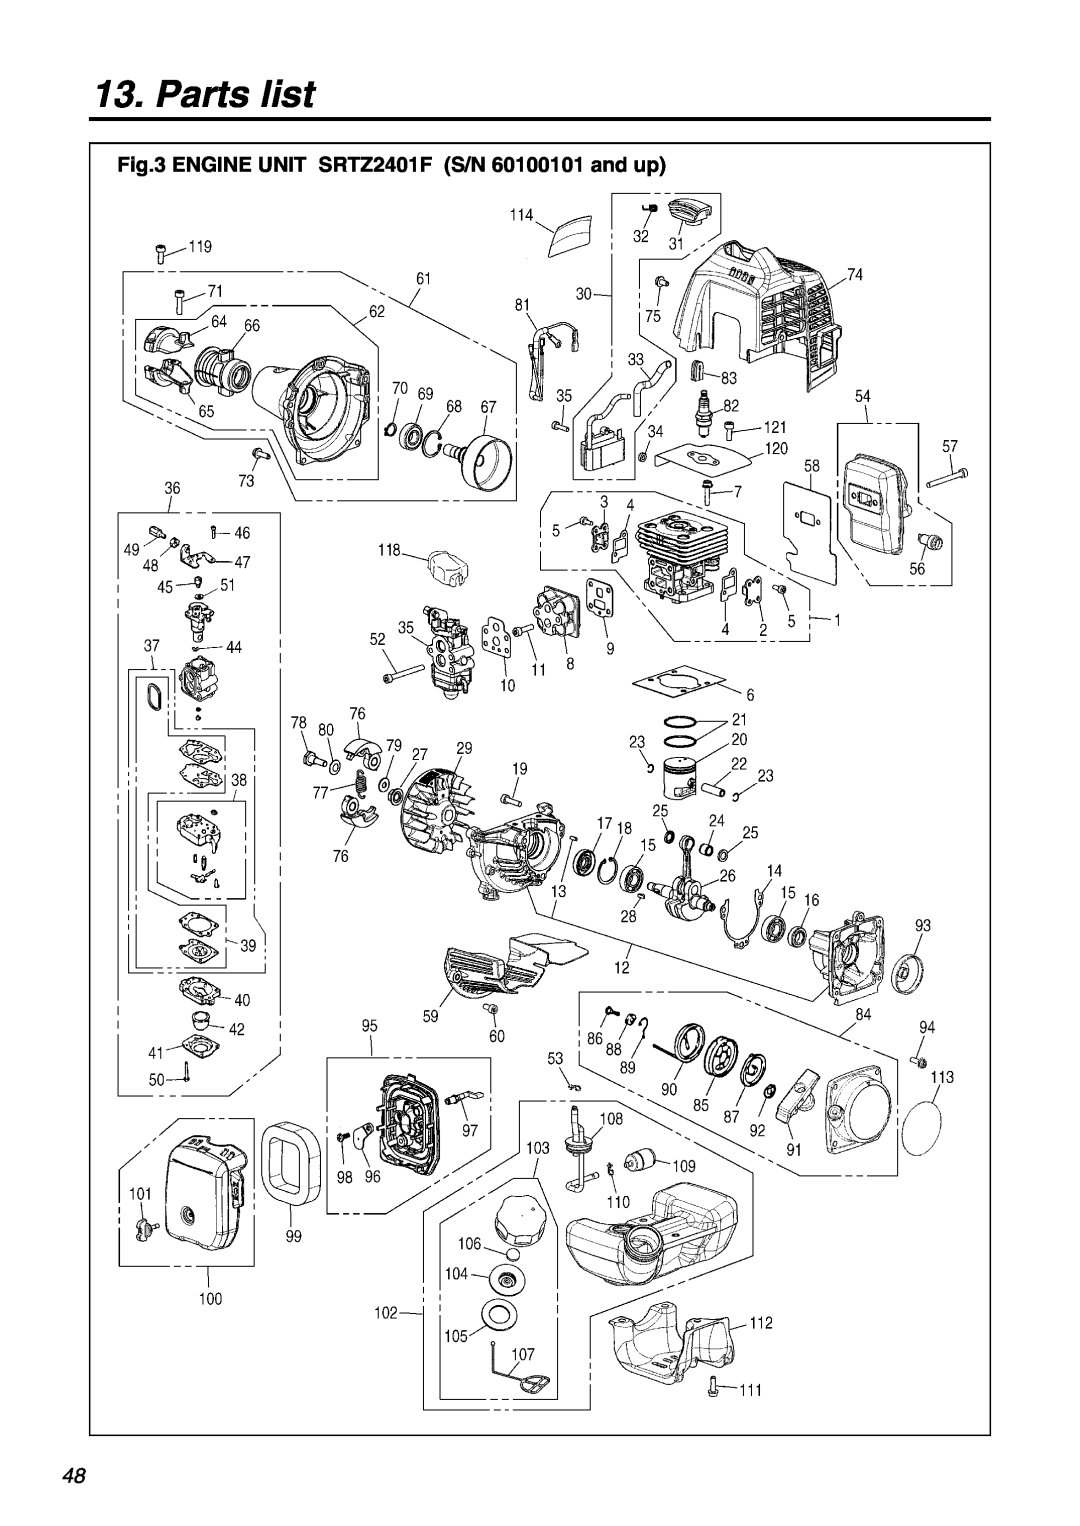 RedMax manual Parts list, ENGINE UNIT SRTZ2401F S/N 60100101 and up 